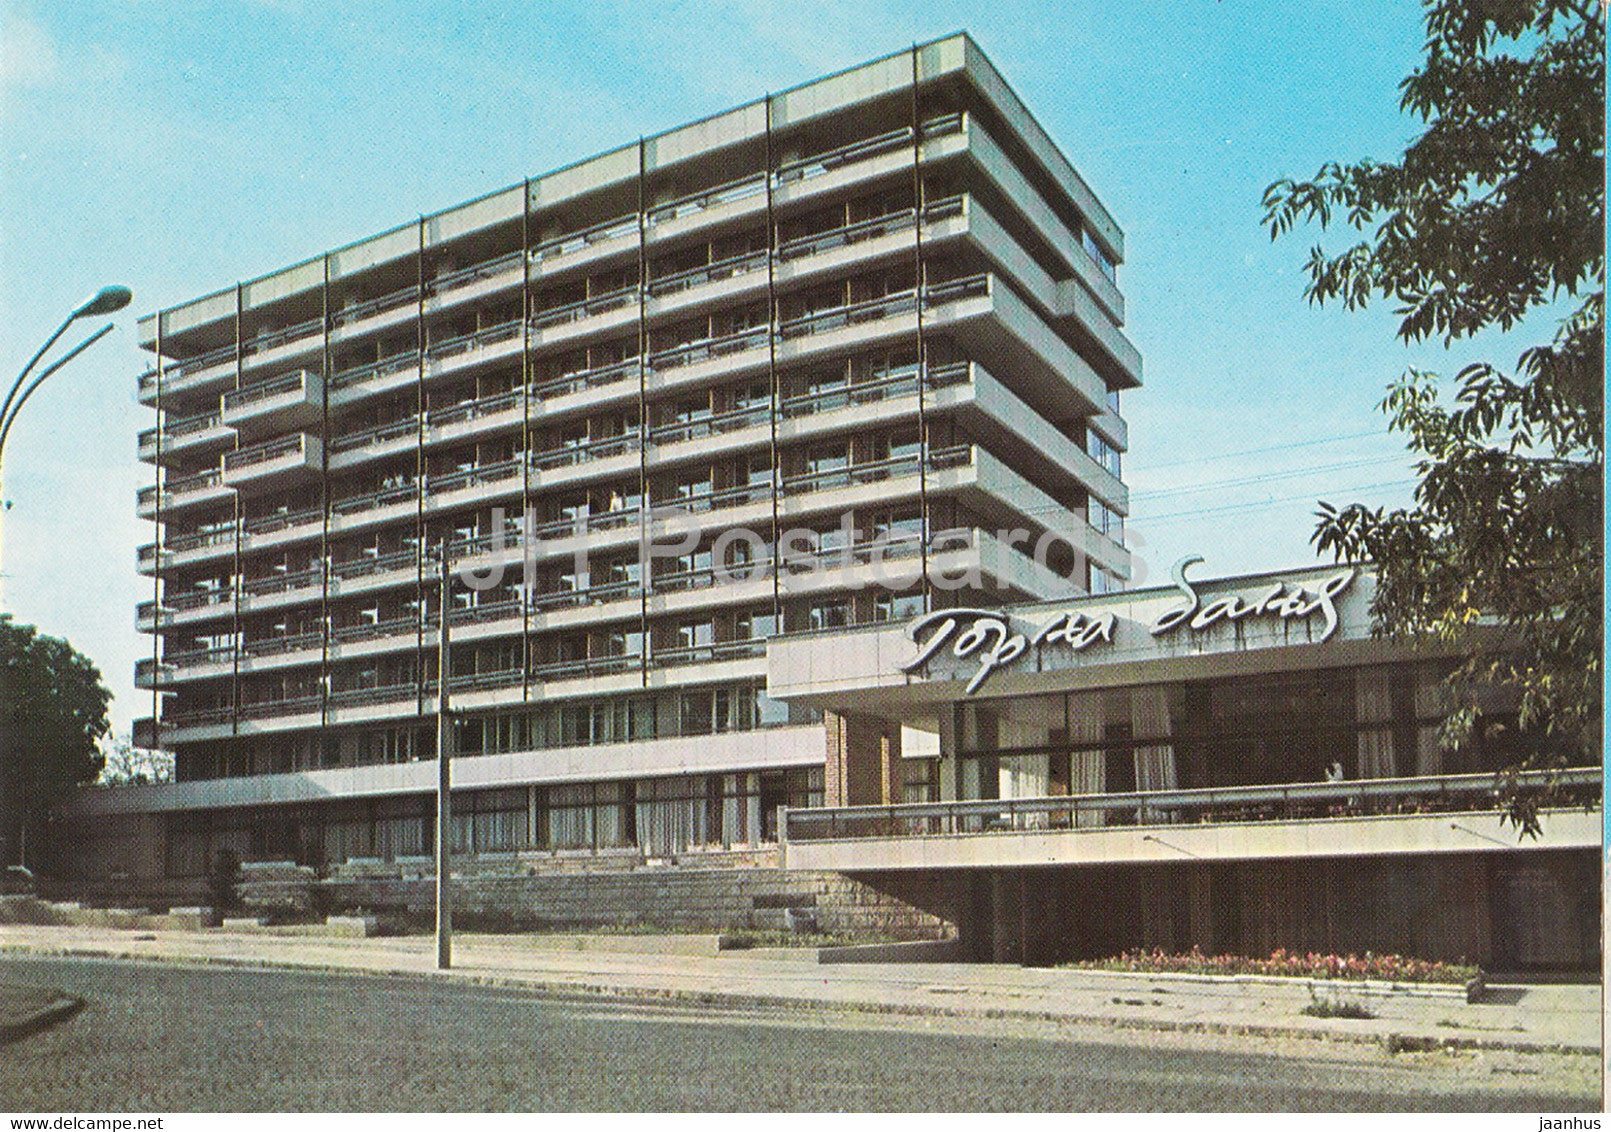 Gorna Banya - hotel restaurant - 1973 - Bulgaria - unused - JH Postcards